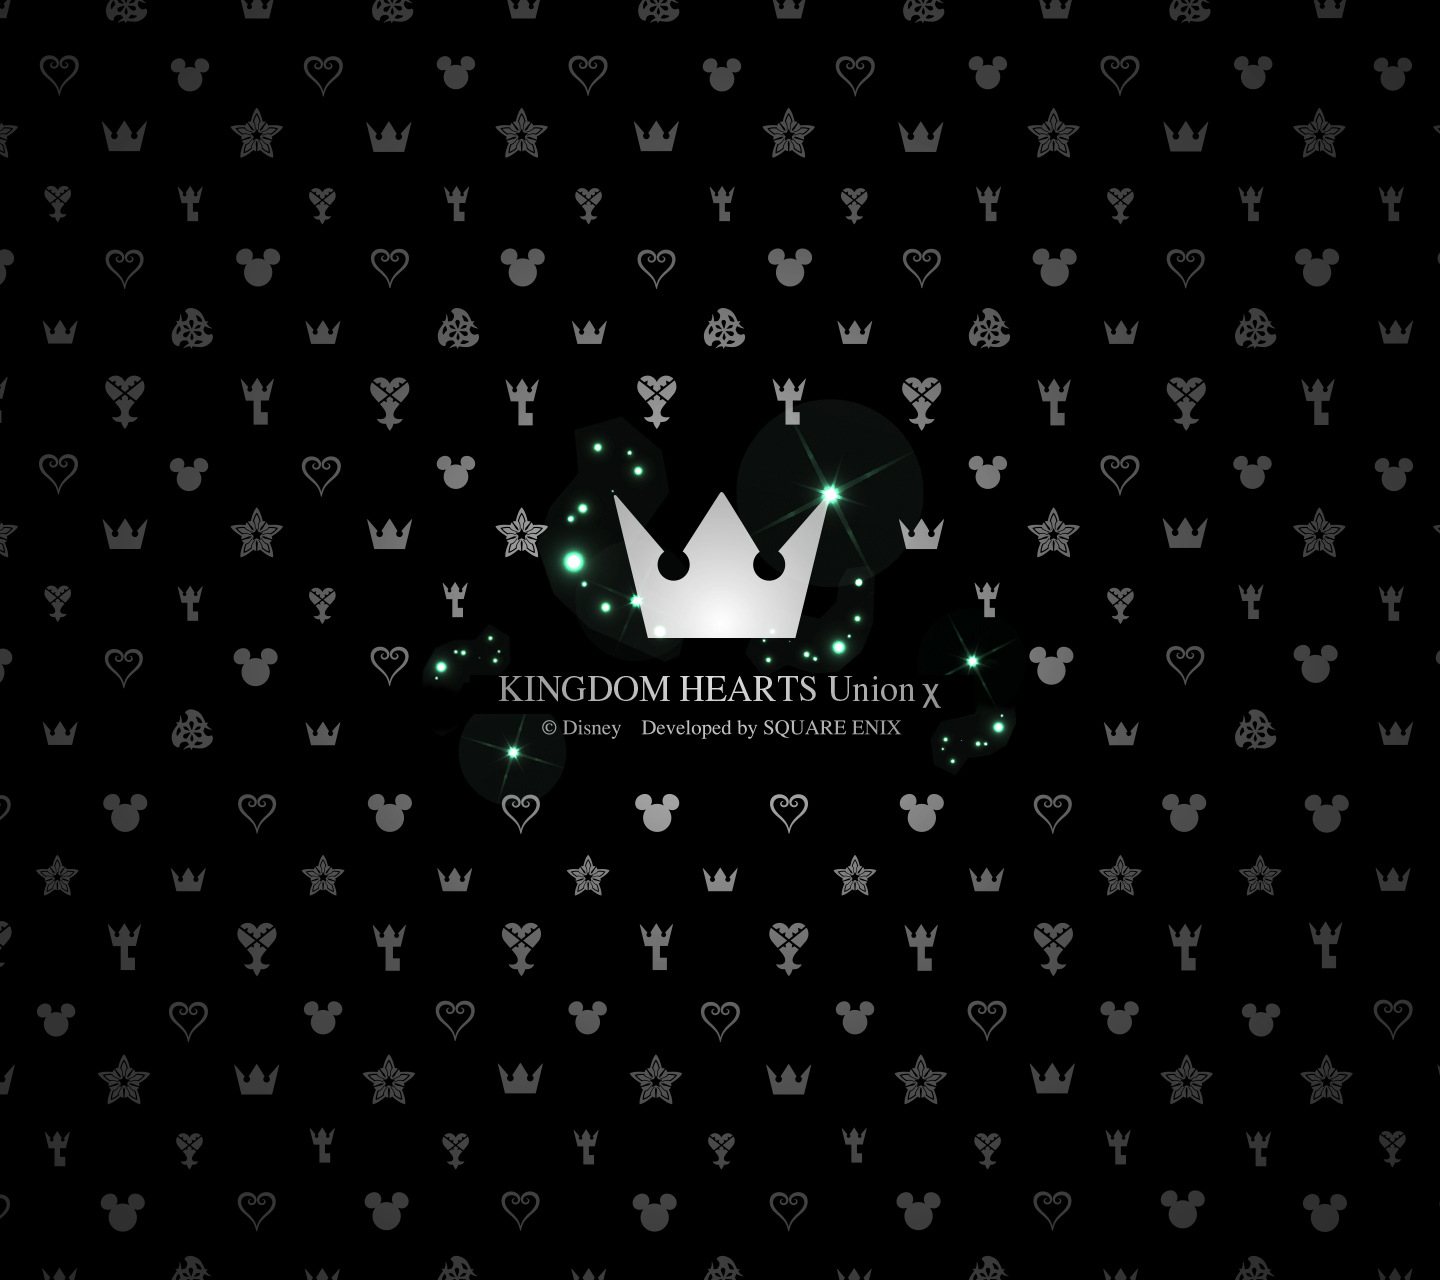 Kingdom Hearts Wallpaper IPhone 59 images